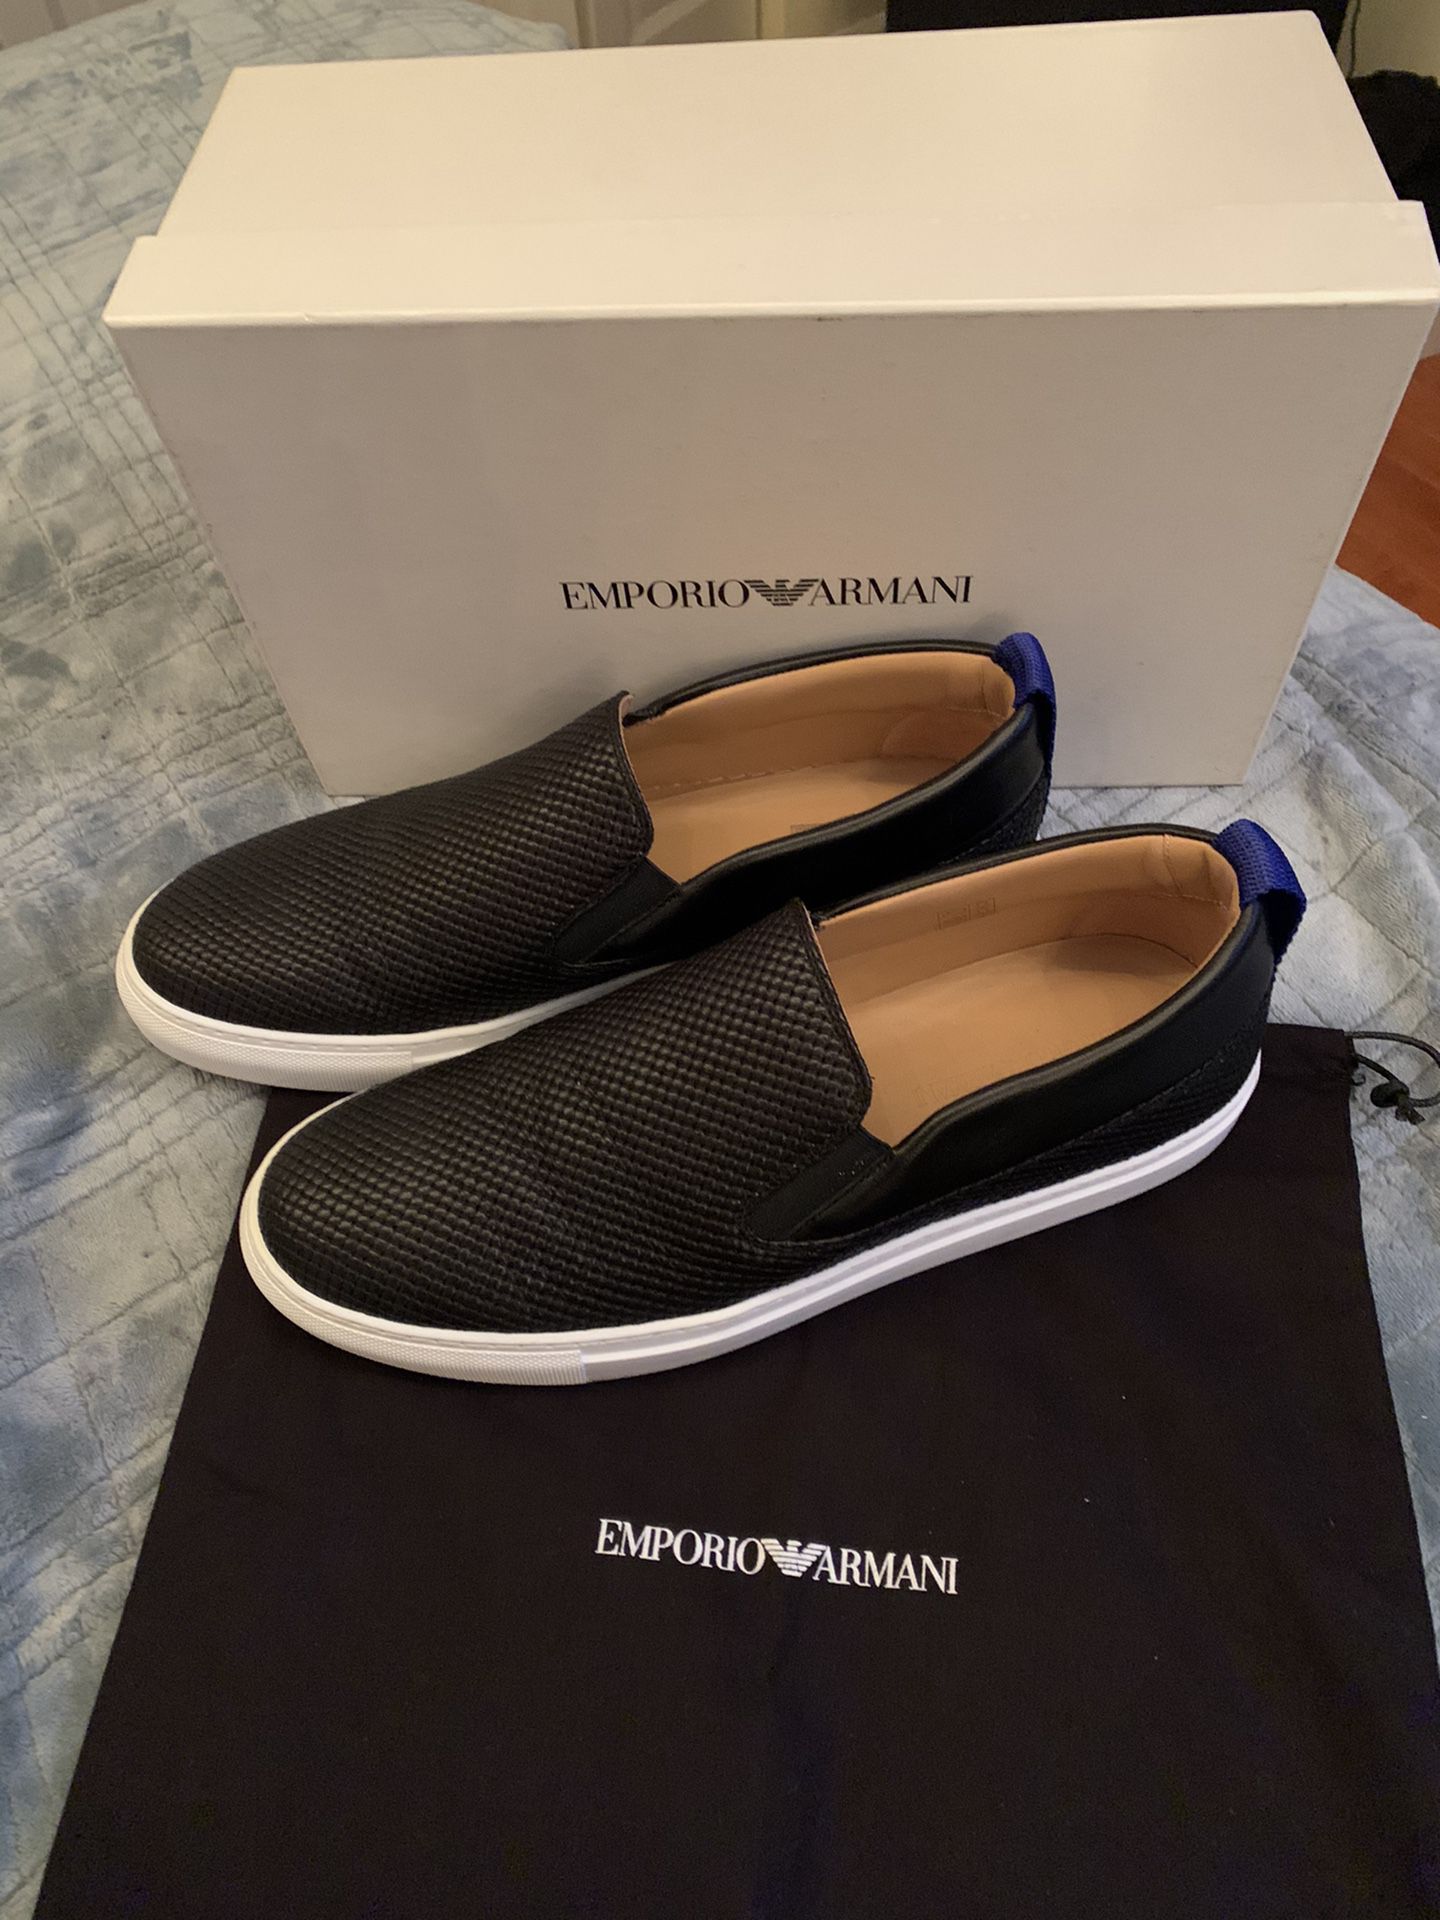 Emporio Armani leather shoes sz 11